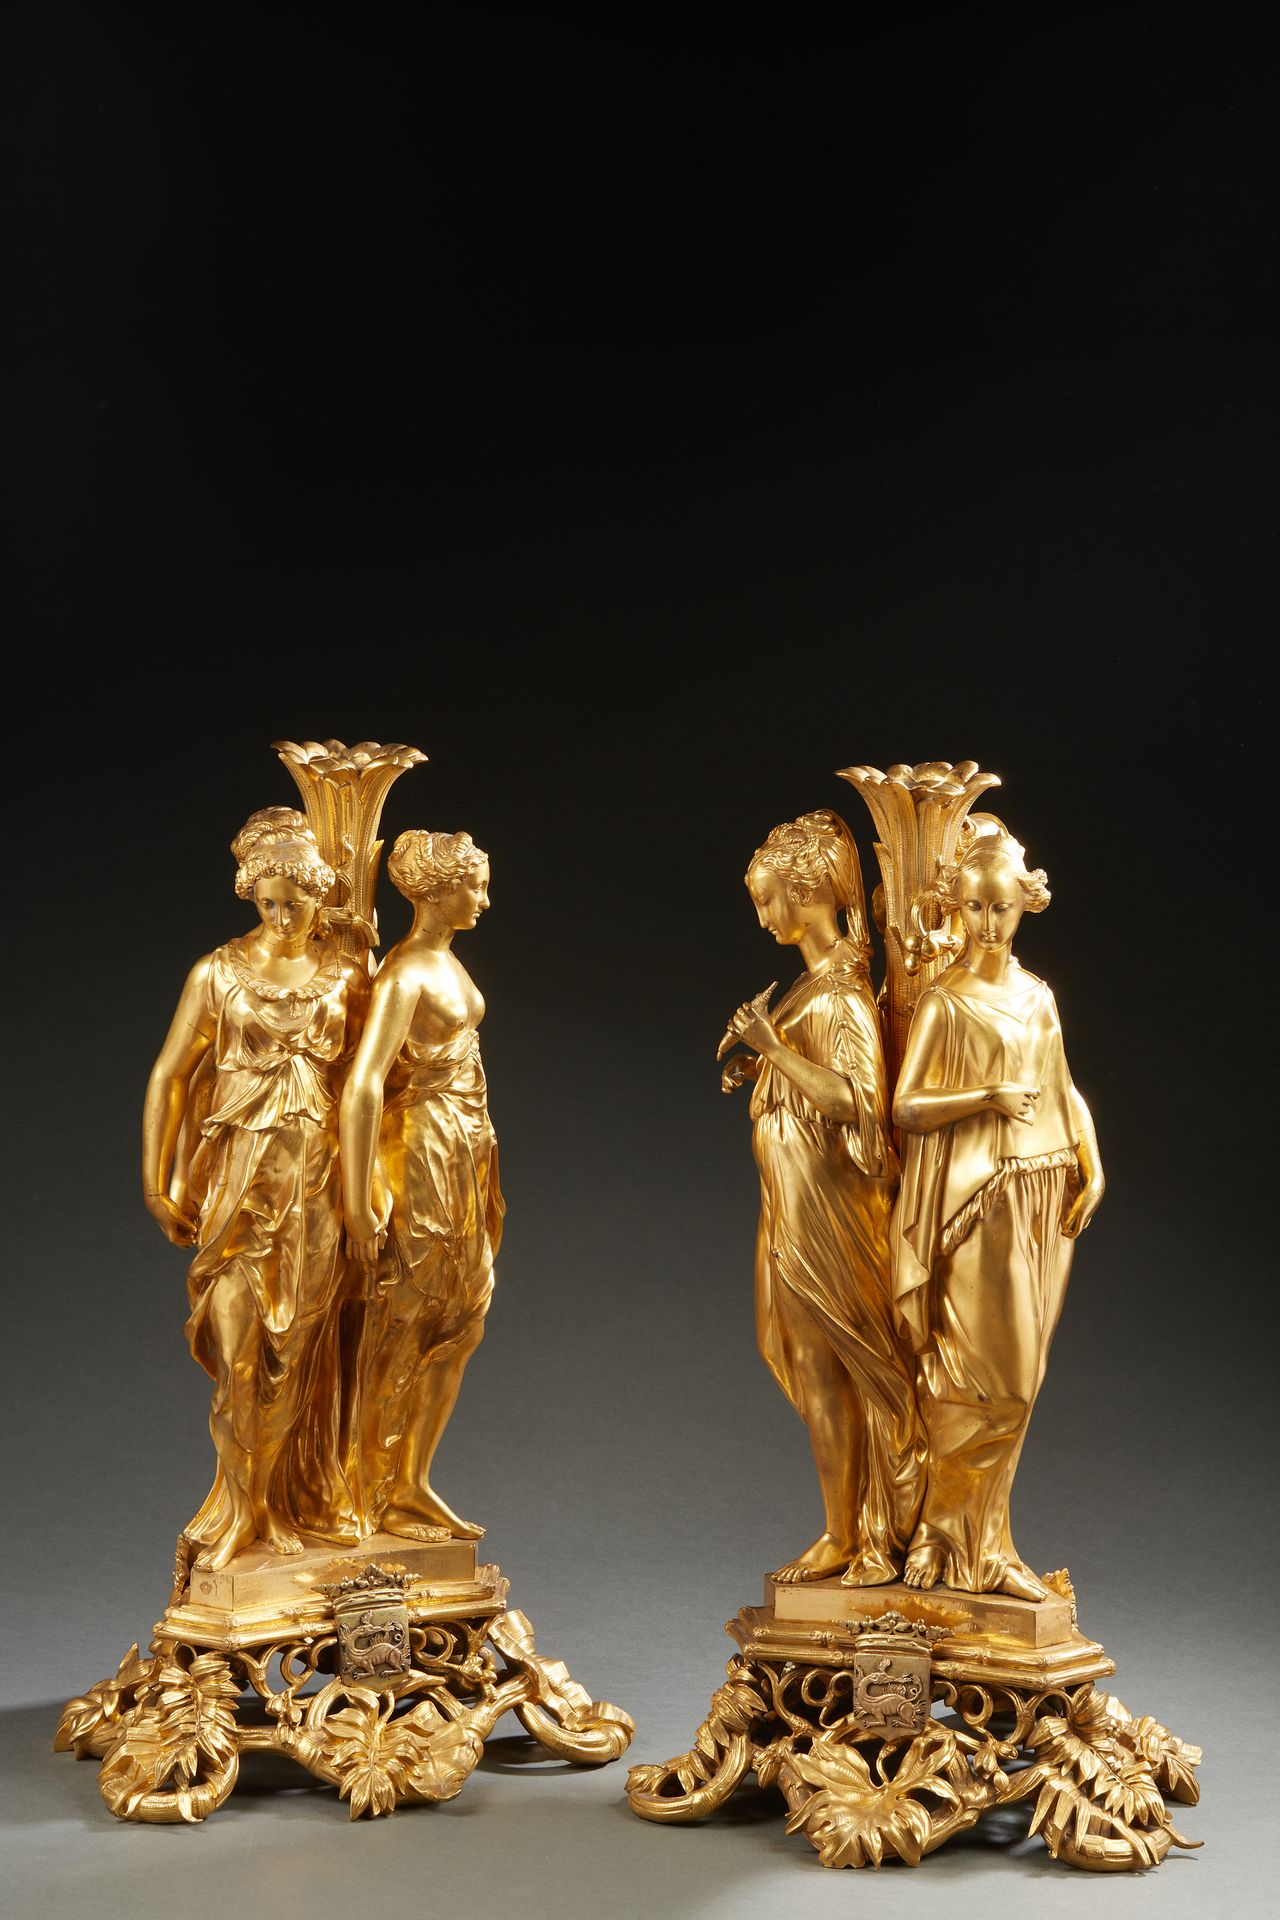 Null 鎏金青铜雕塑组一对

三圣母，底座上装饰着鲜花和蝾螈

H.(总数)：52厘米